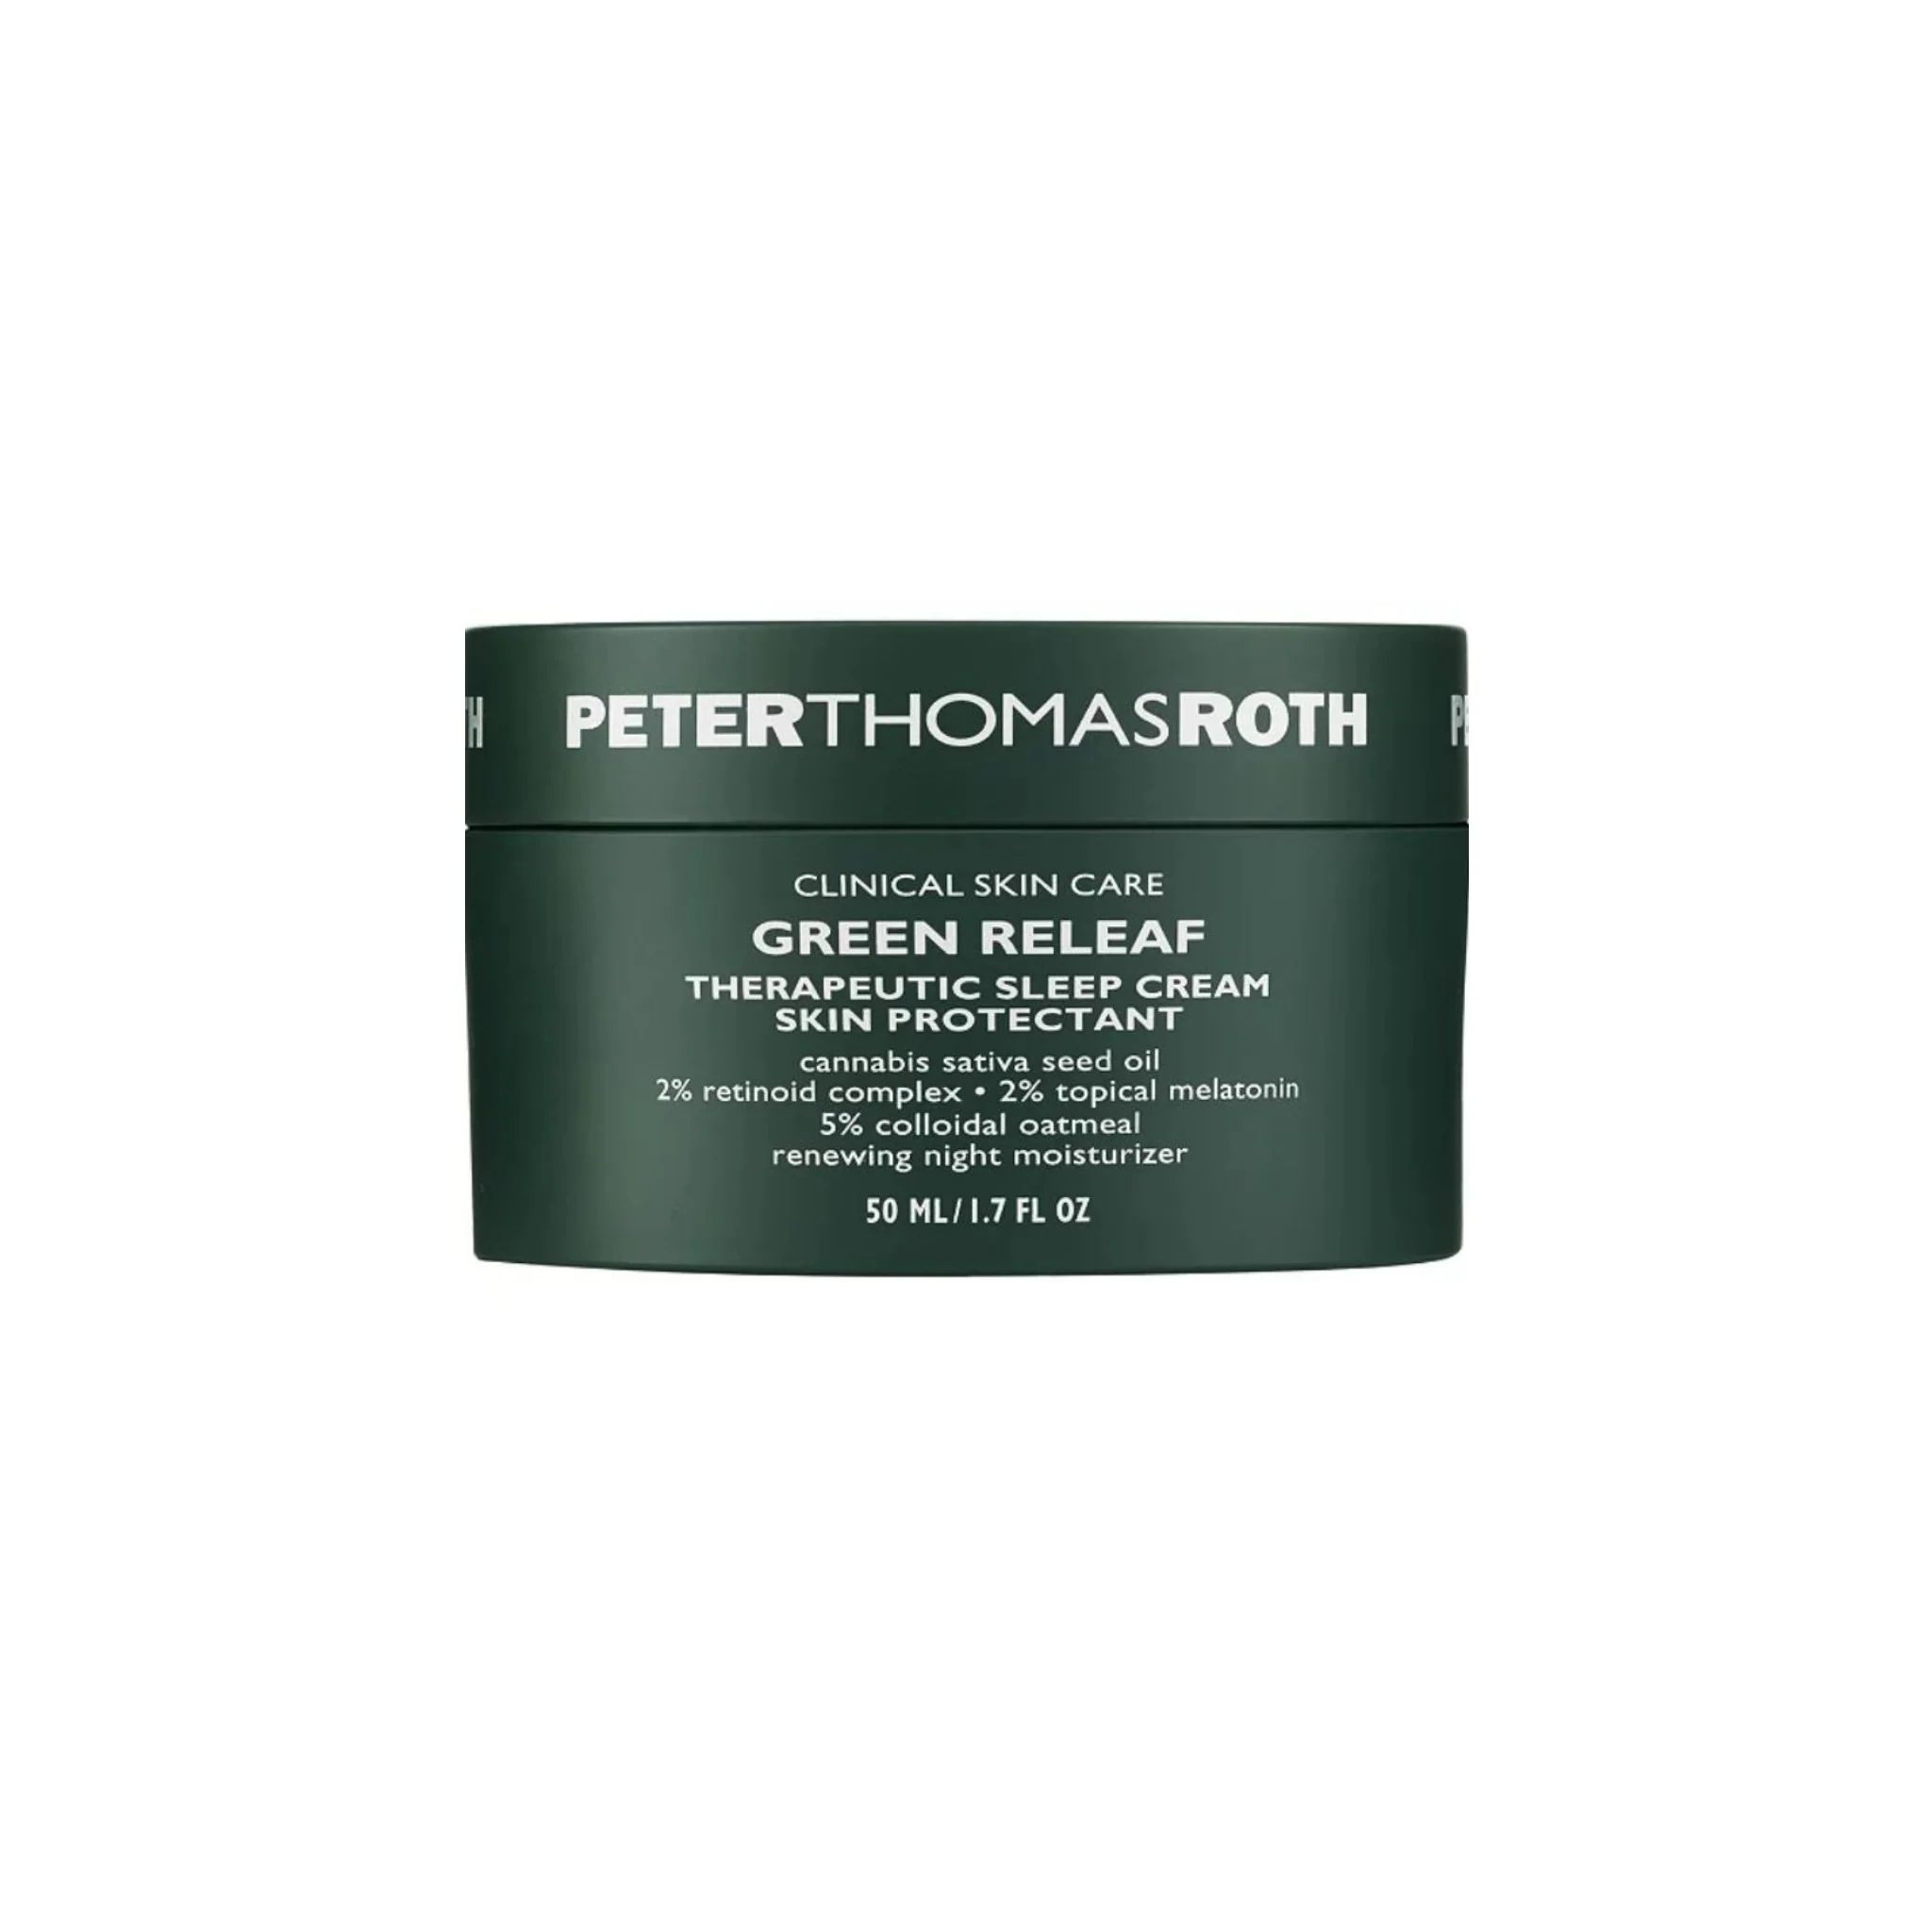 Green Releaf Therapeutic Sleep Cream Skin Protectant | Bluemercury, Inc.